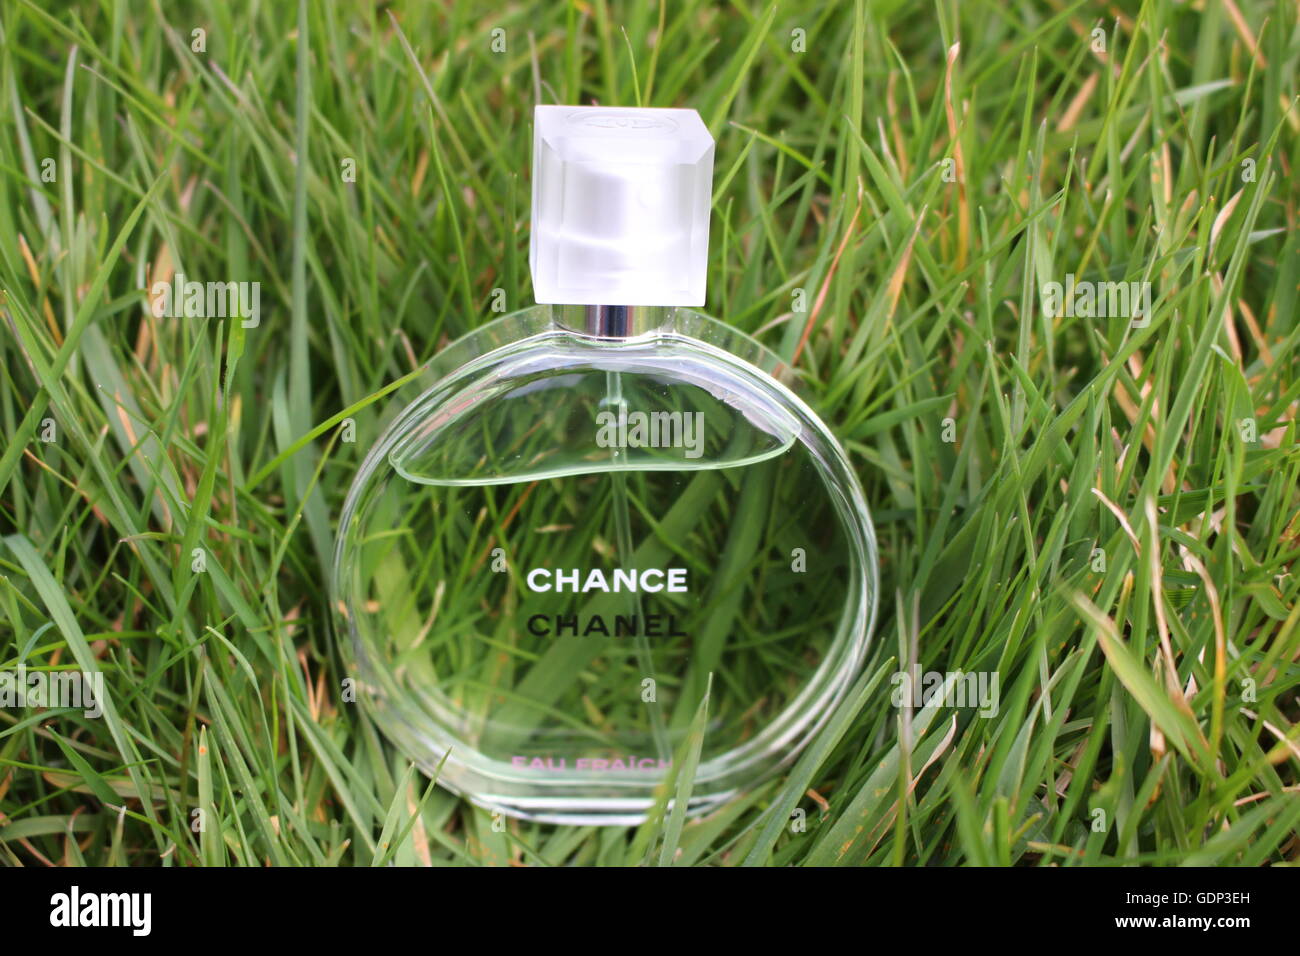 Fragrance Chanel Stock Photo